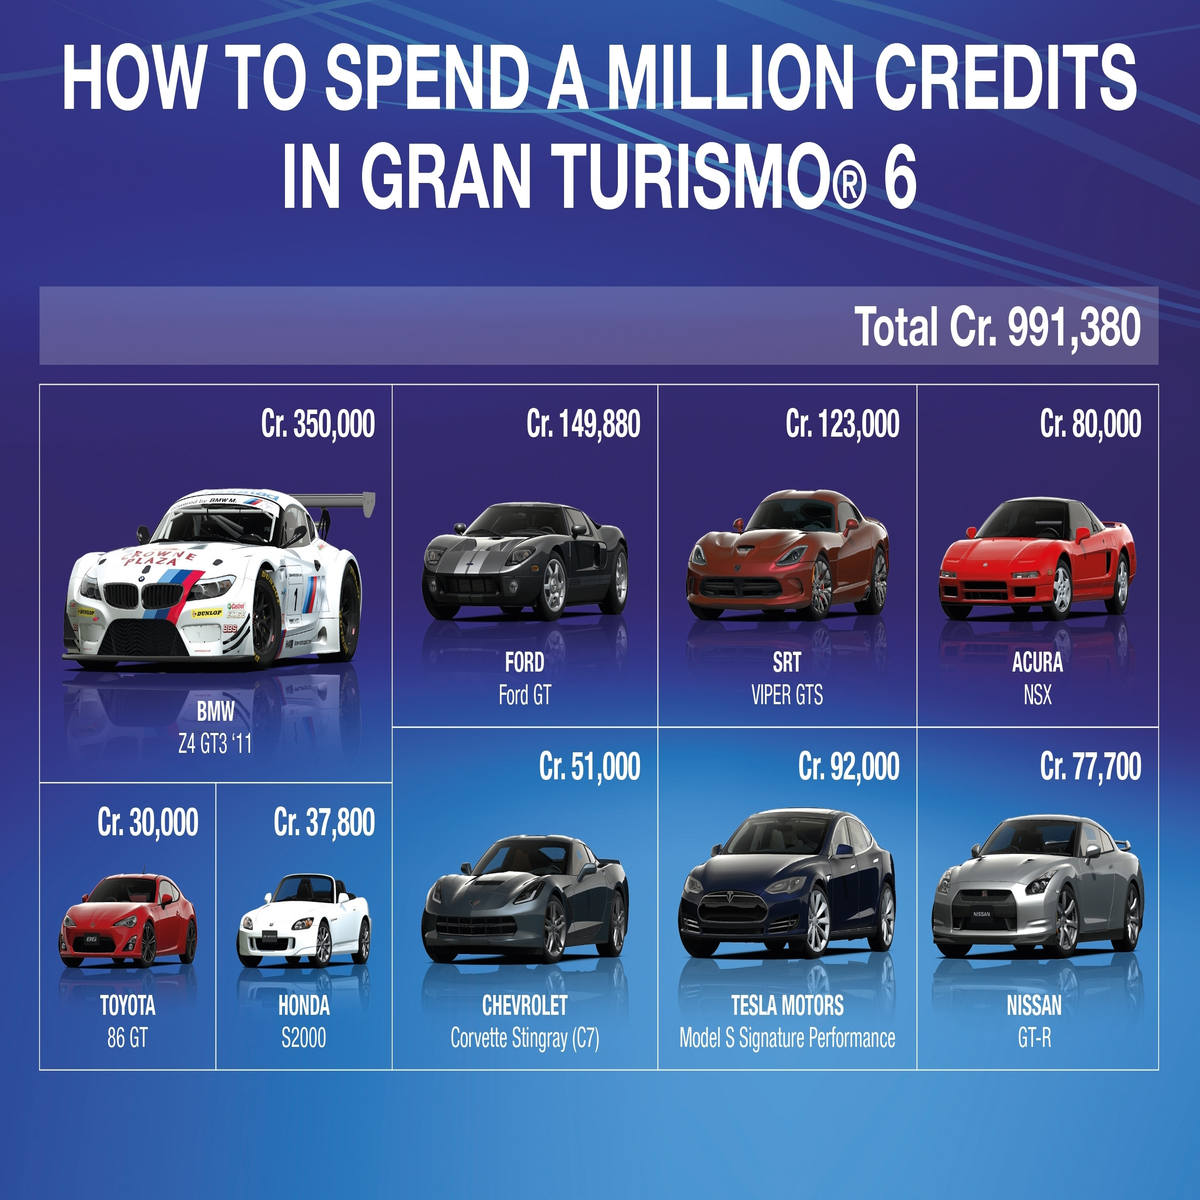 Yes, Gran Turismo micro-transactions 6 has